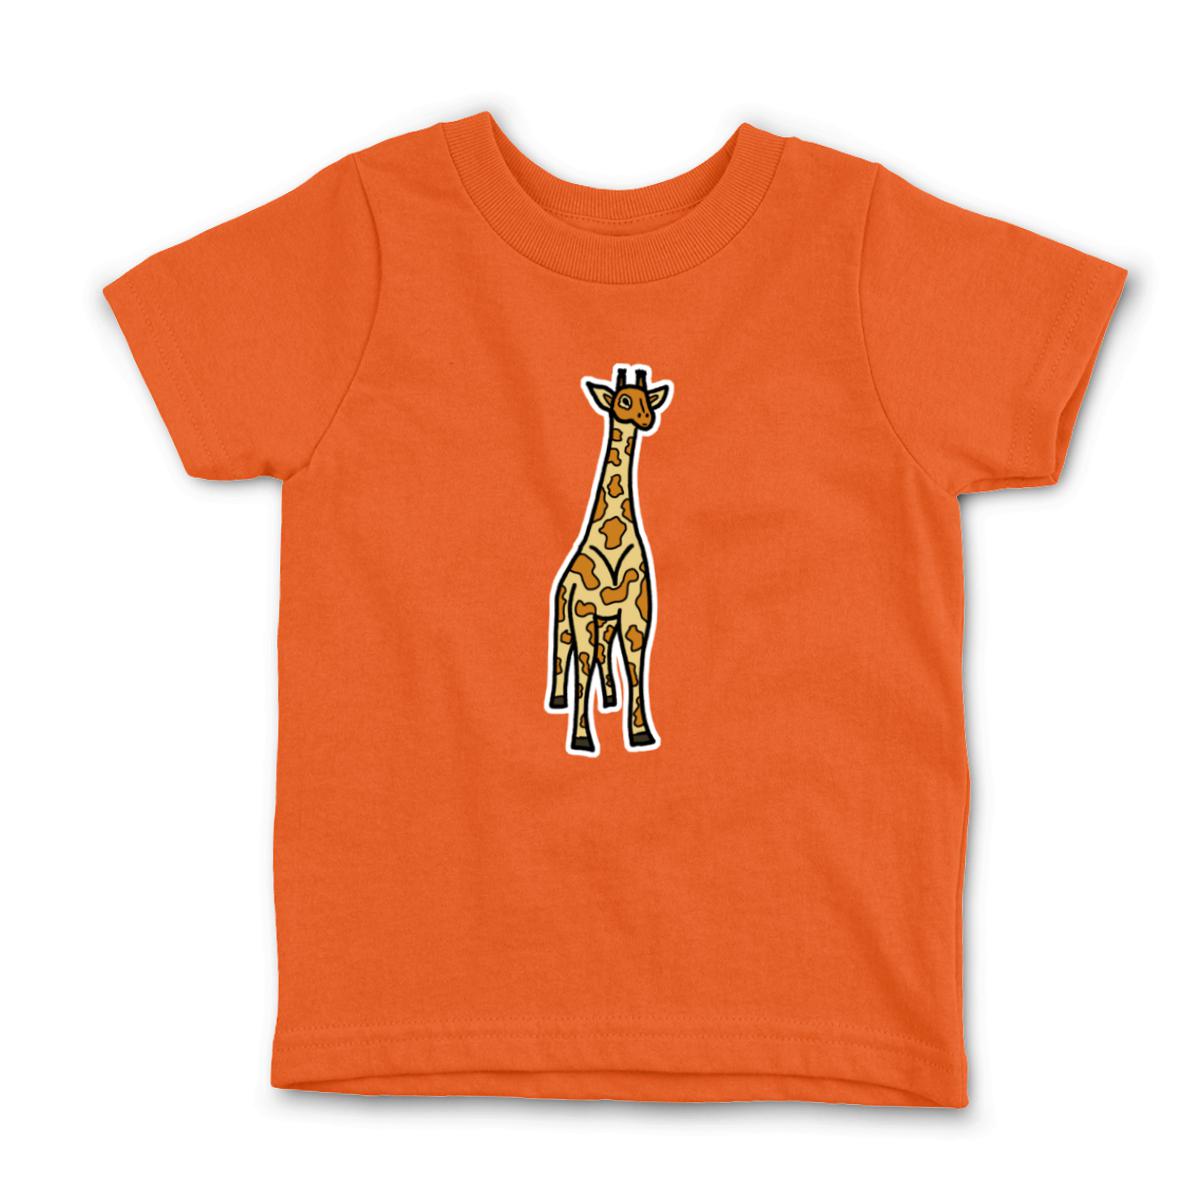 Toy Giraffe Kid's Tee Small orange